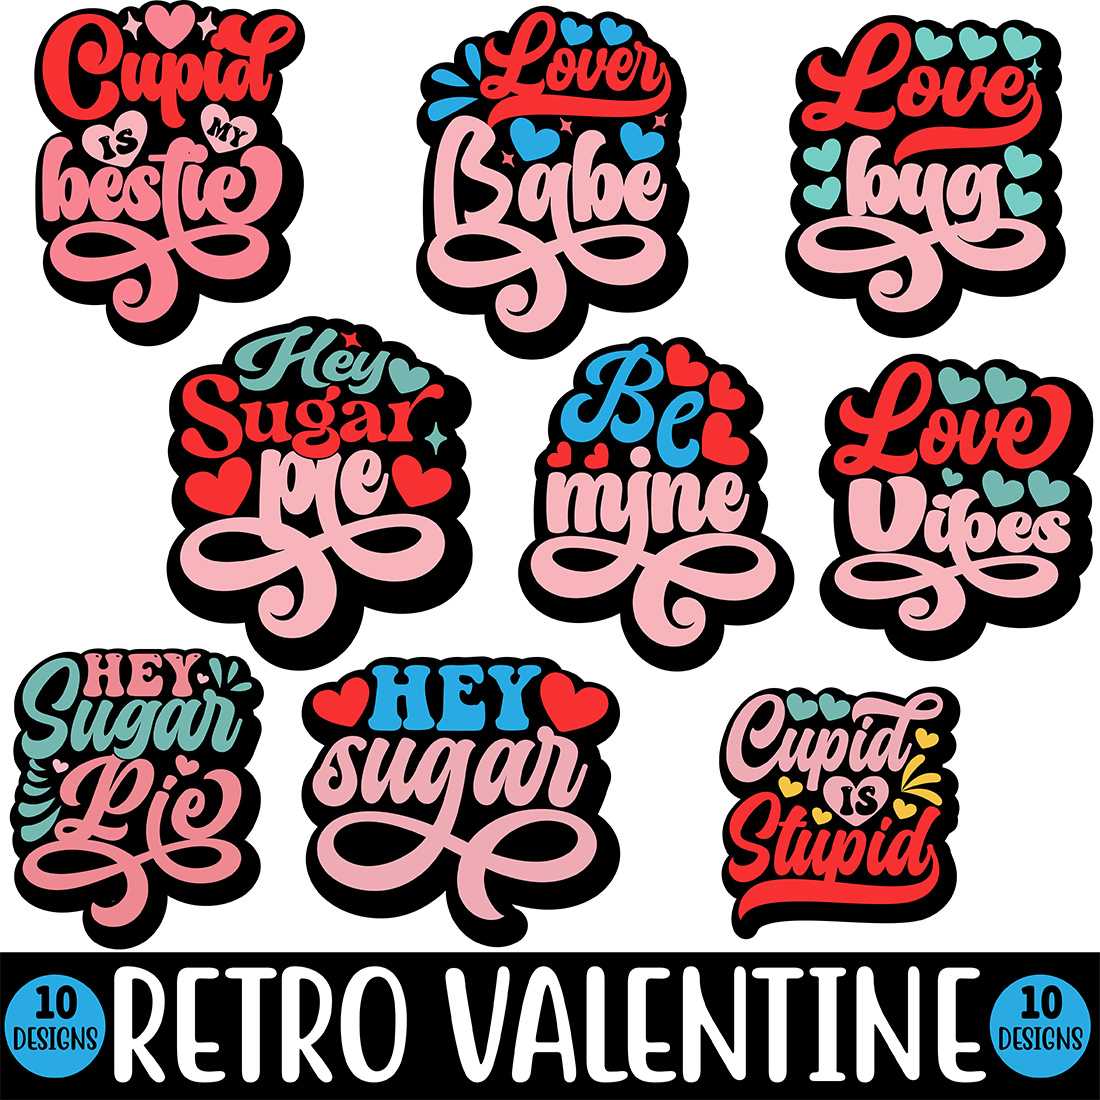 Retro Valentine Design SVG Bundle cover image.